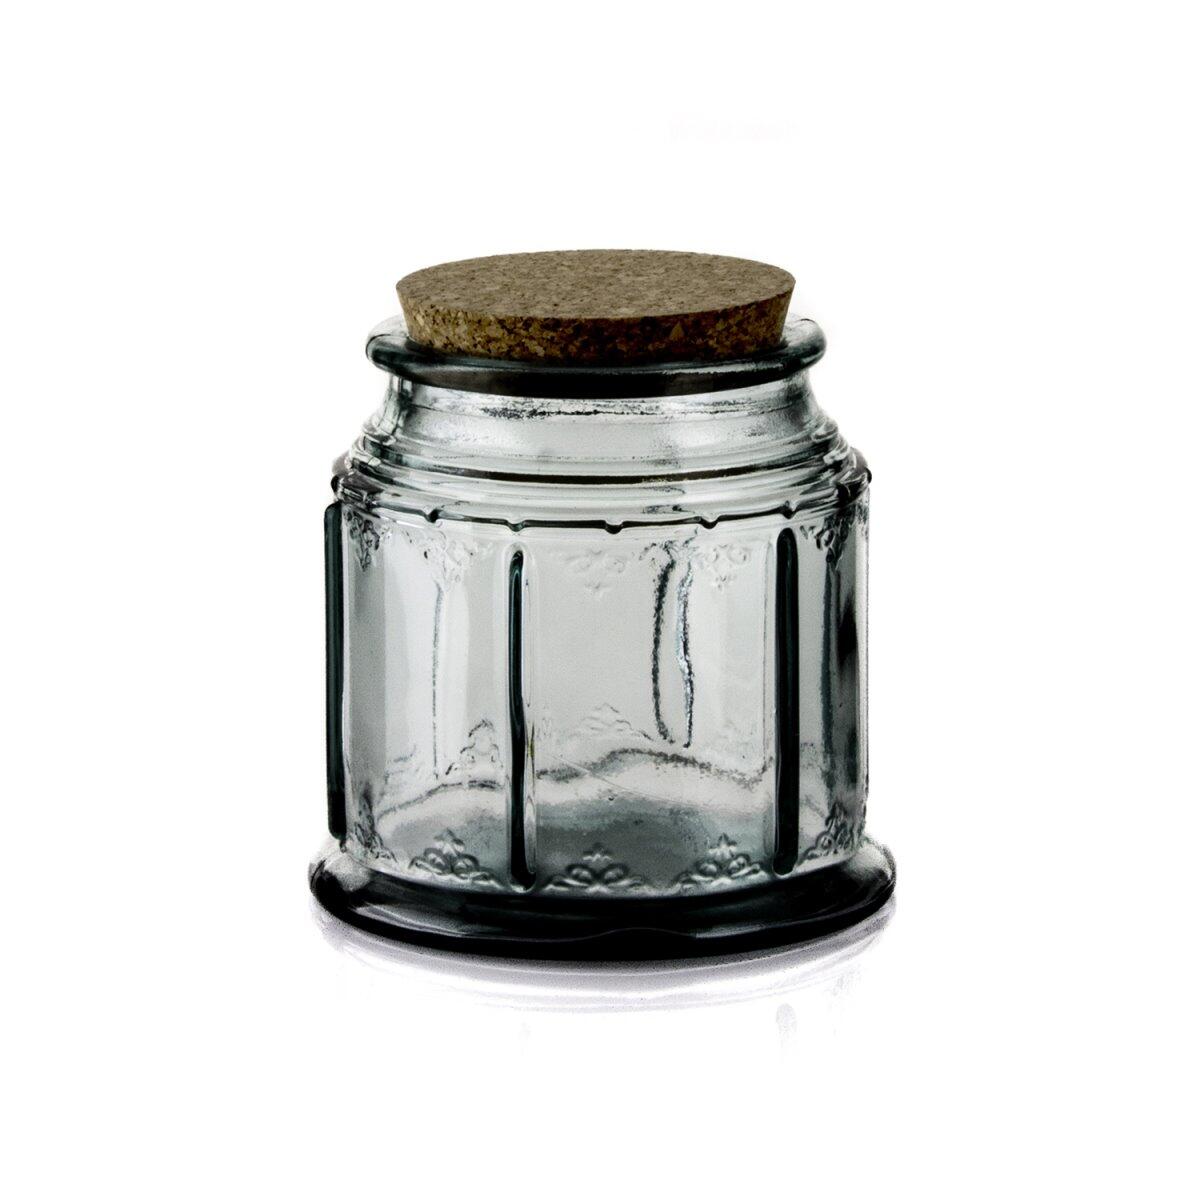 Sanmiguel Tarro Bohemian Cork Jar with Lid